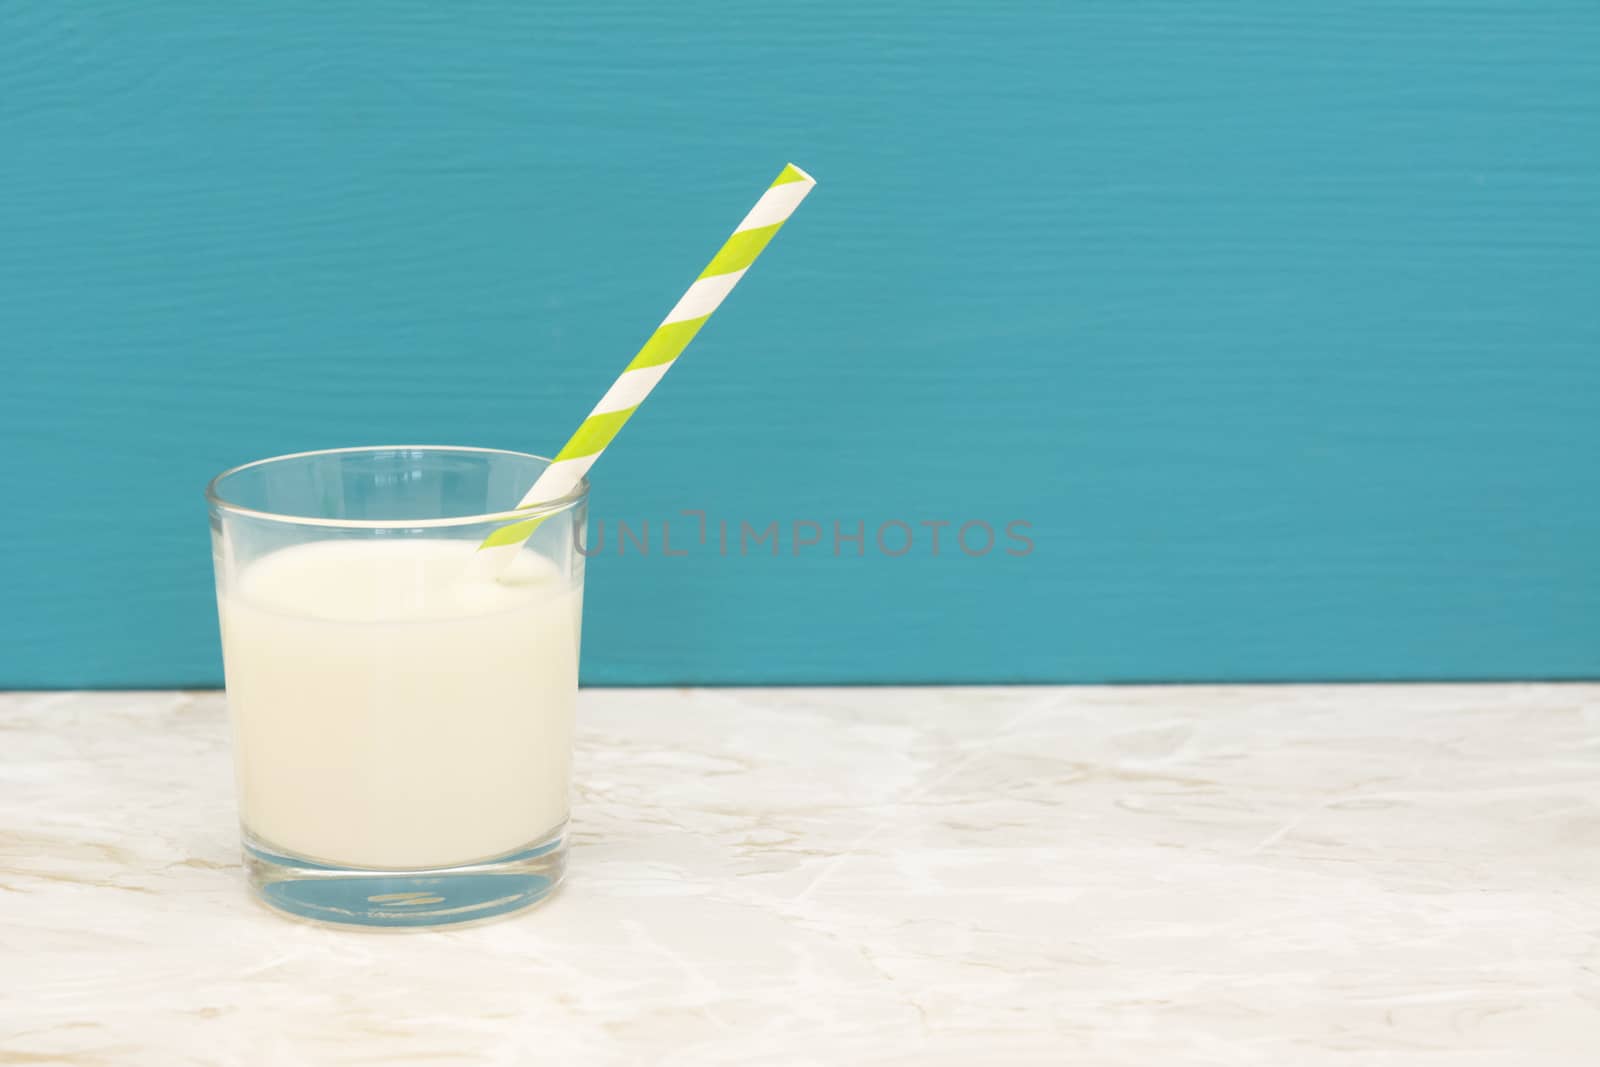 Creamy, fresh milk with a straw in a glass by sarahdoow